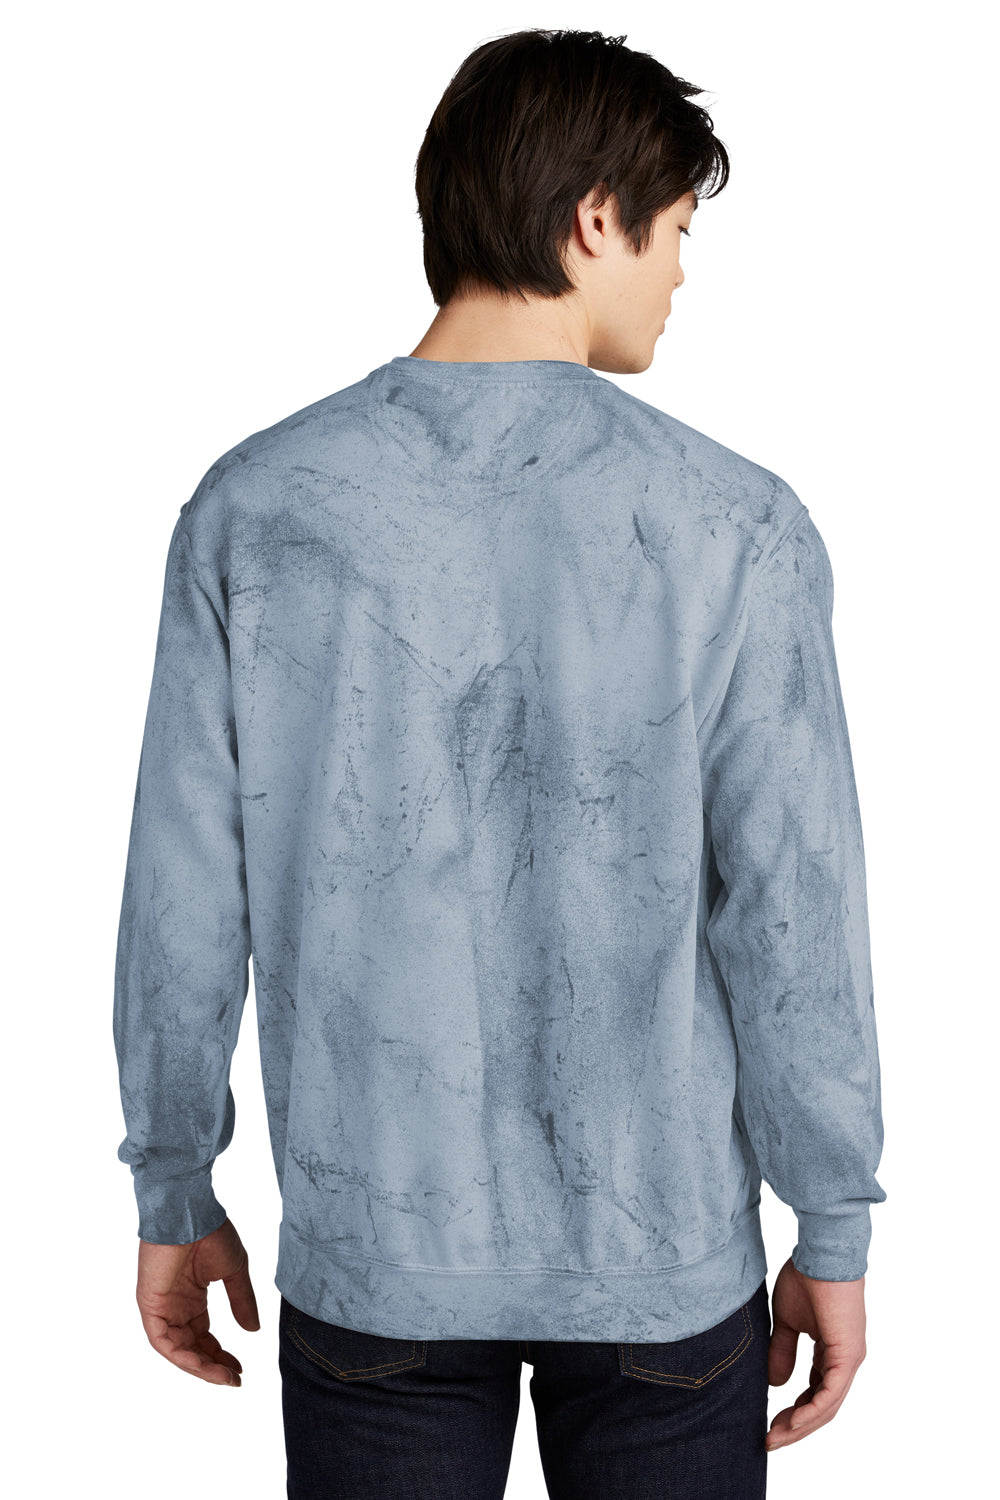 Comfort Colors 1545 Color Blast Crewneck Sweatshirt Ocean Blue Back